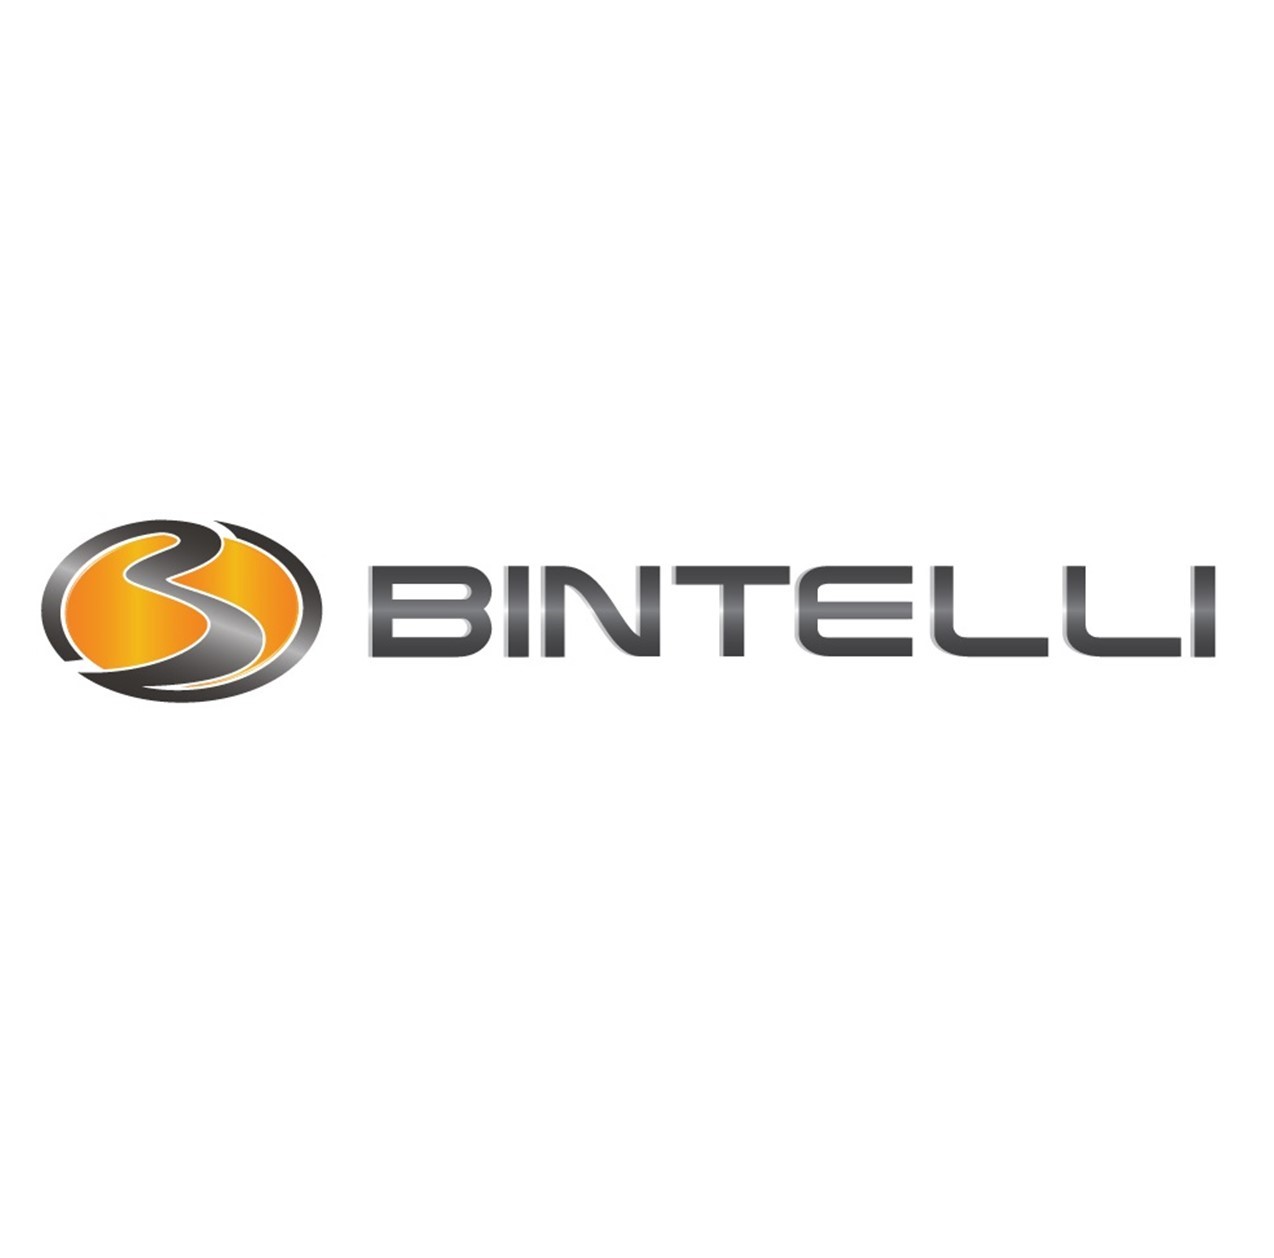 Bintelli Motorsports